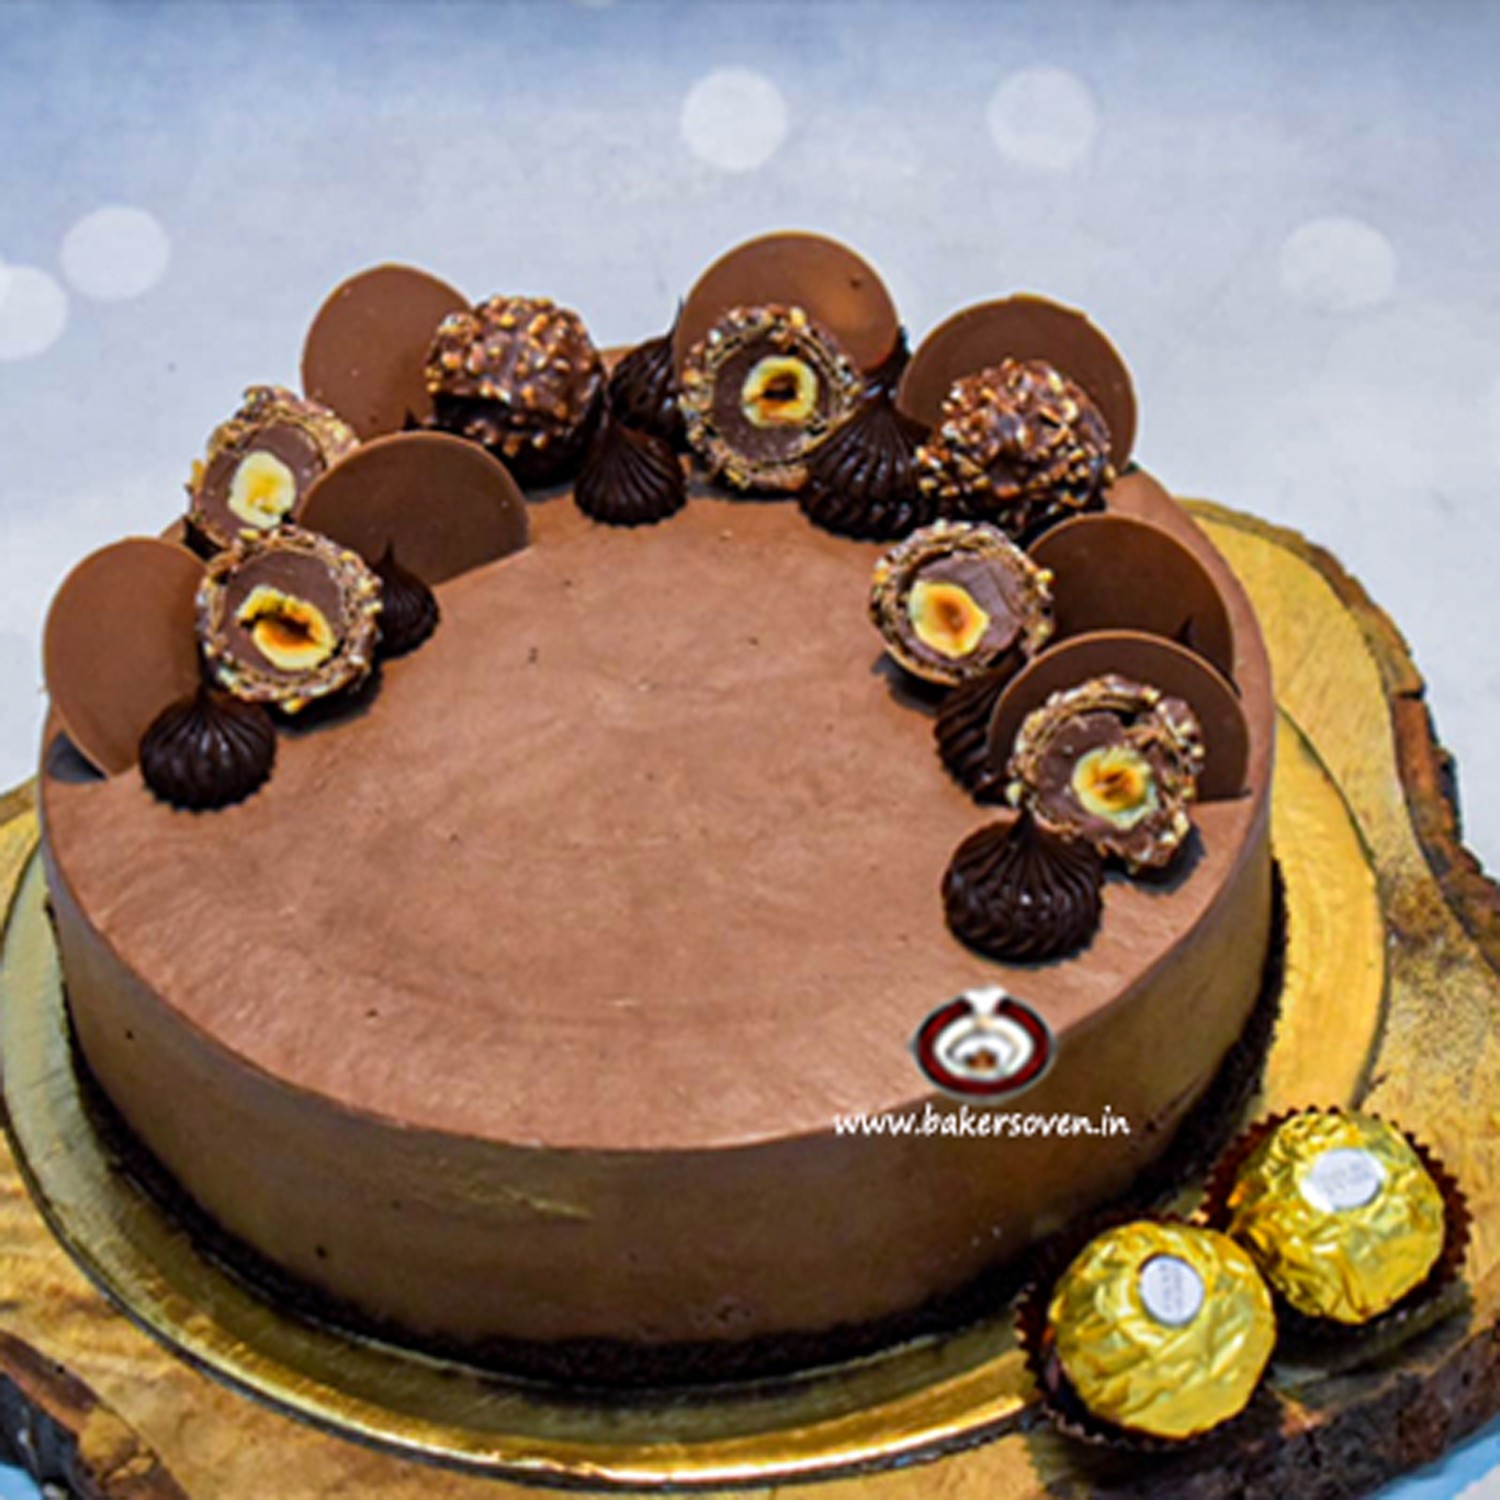 Experience more than 117 ferrero rocher cake